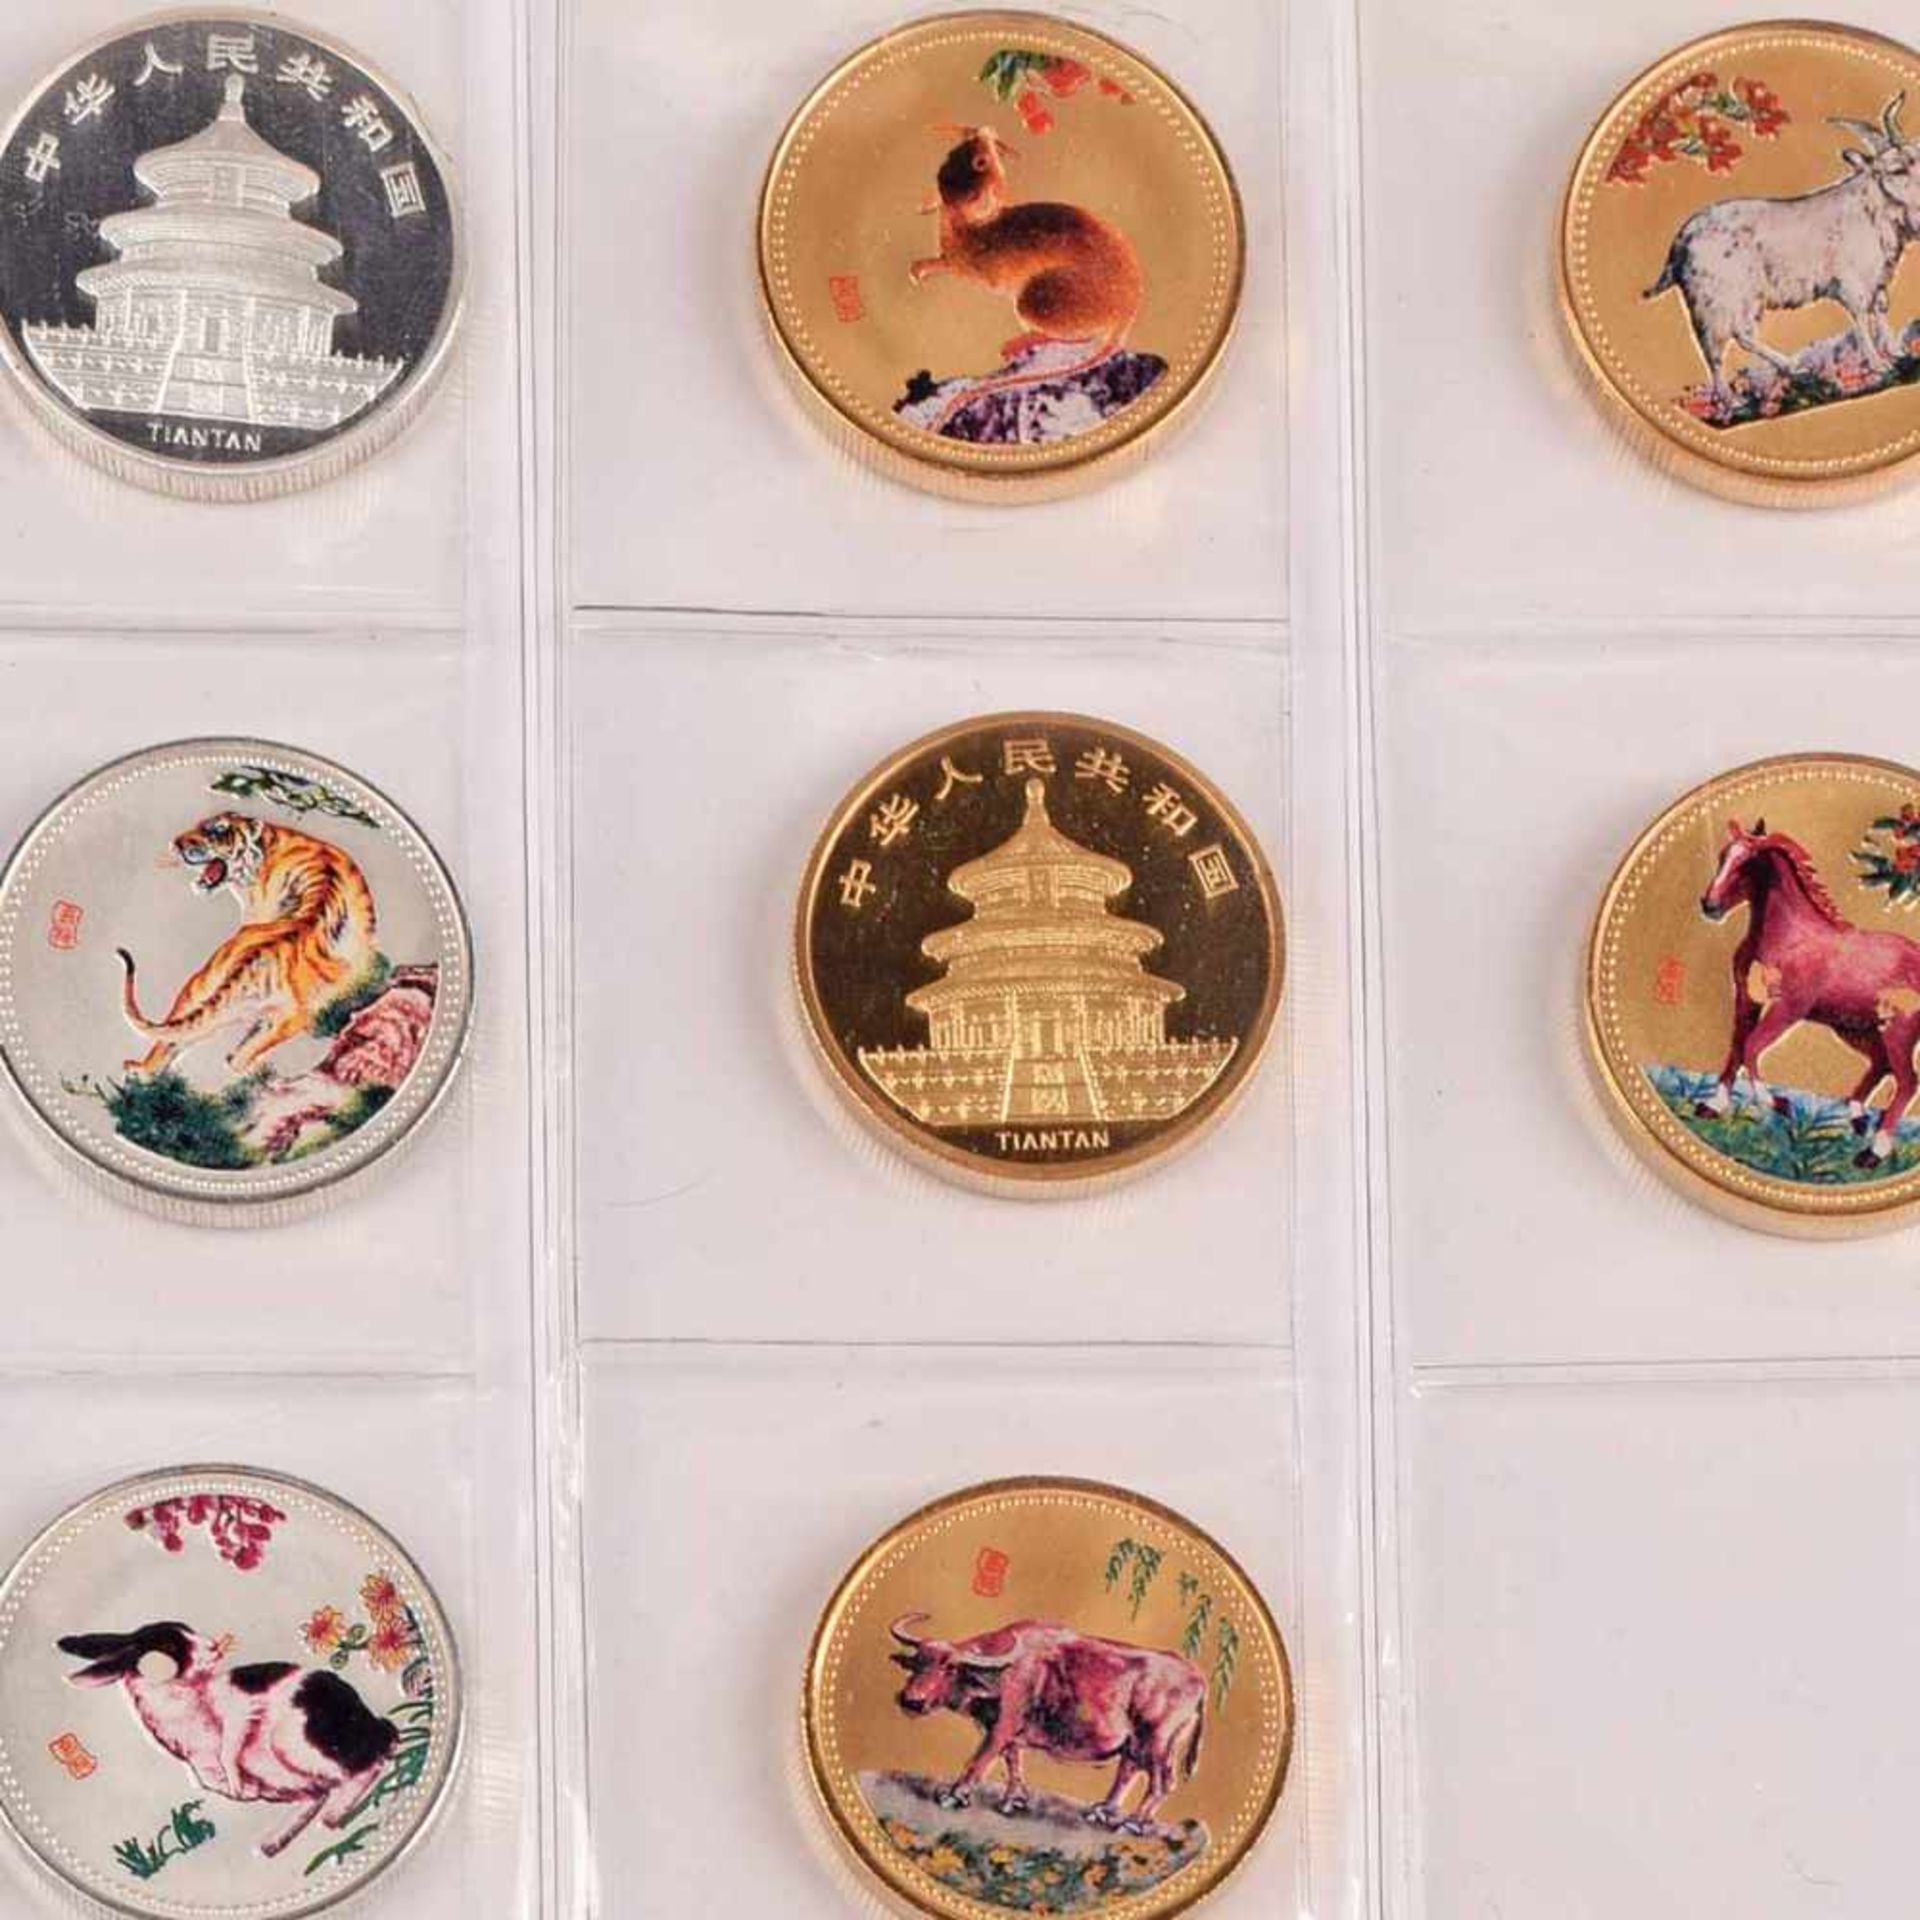 Chinesische Medaillen "Tierkreiszeichen" insg. 10 versch. Ausführungen, 9 x av. Himmelstempel "